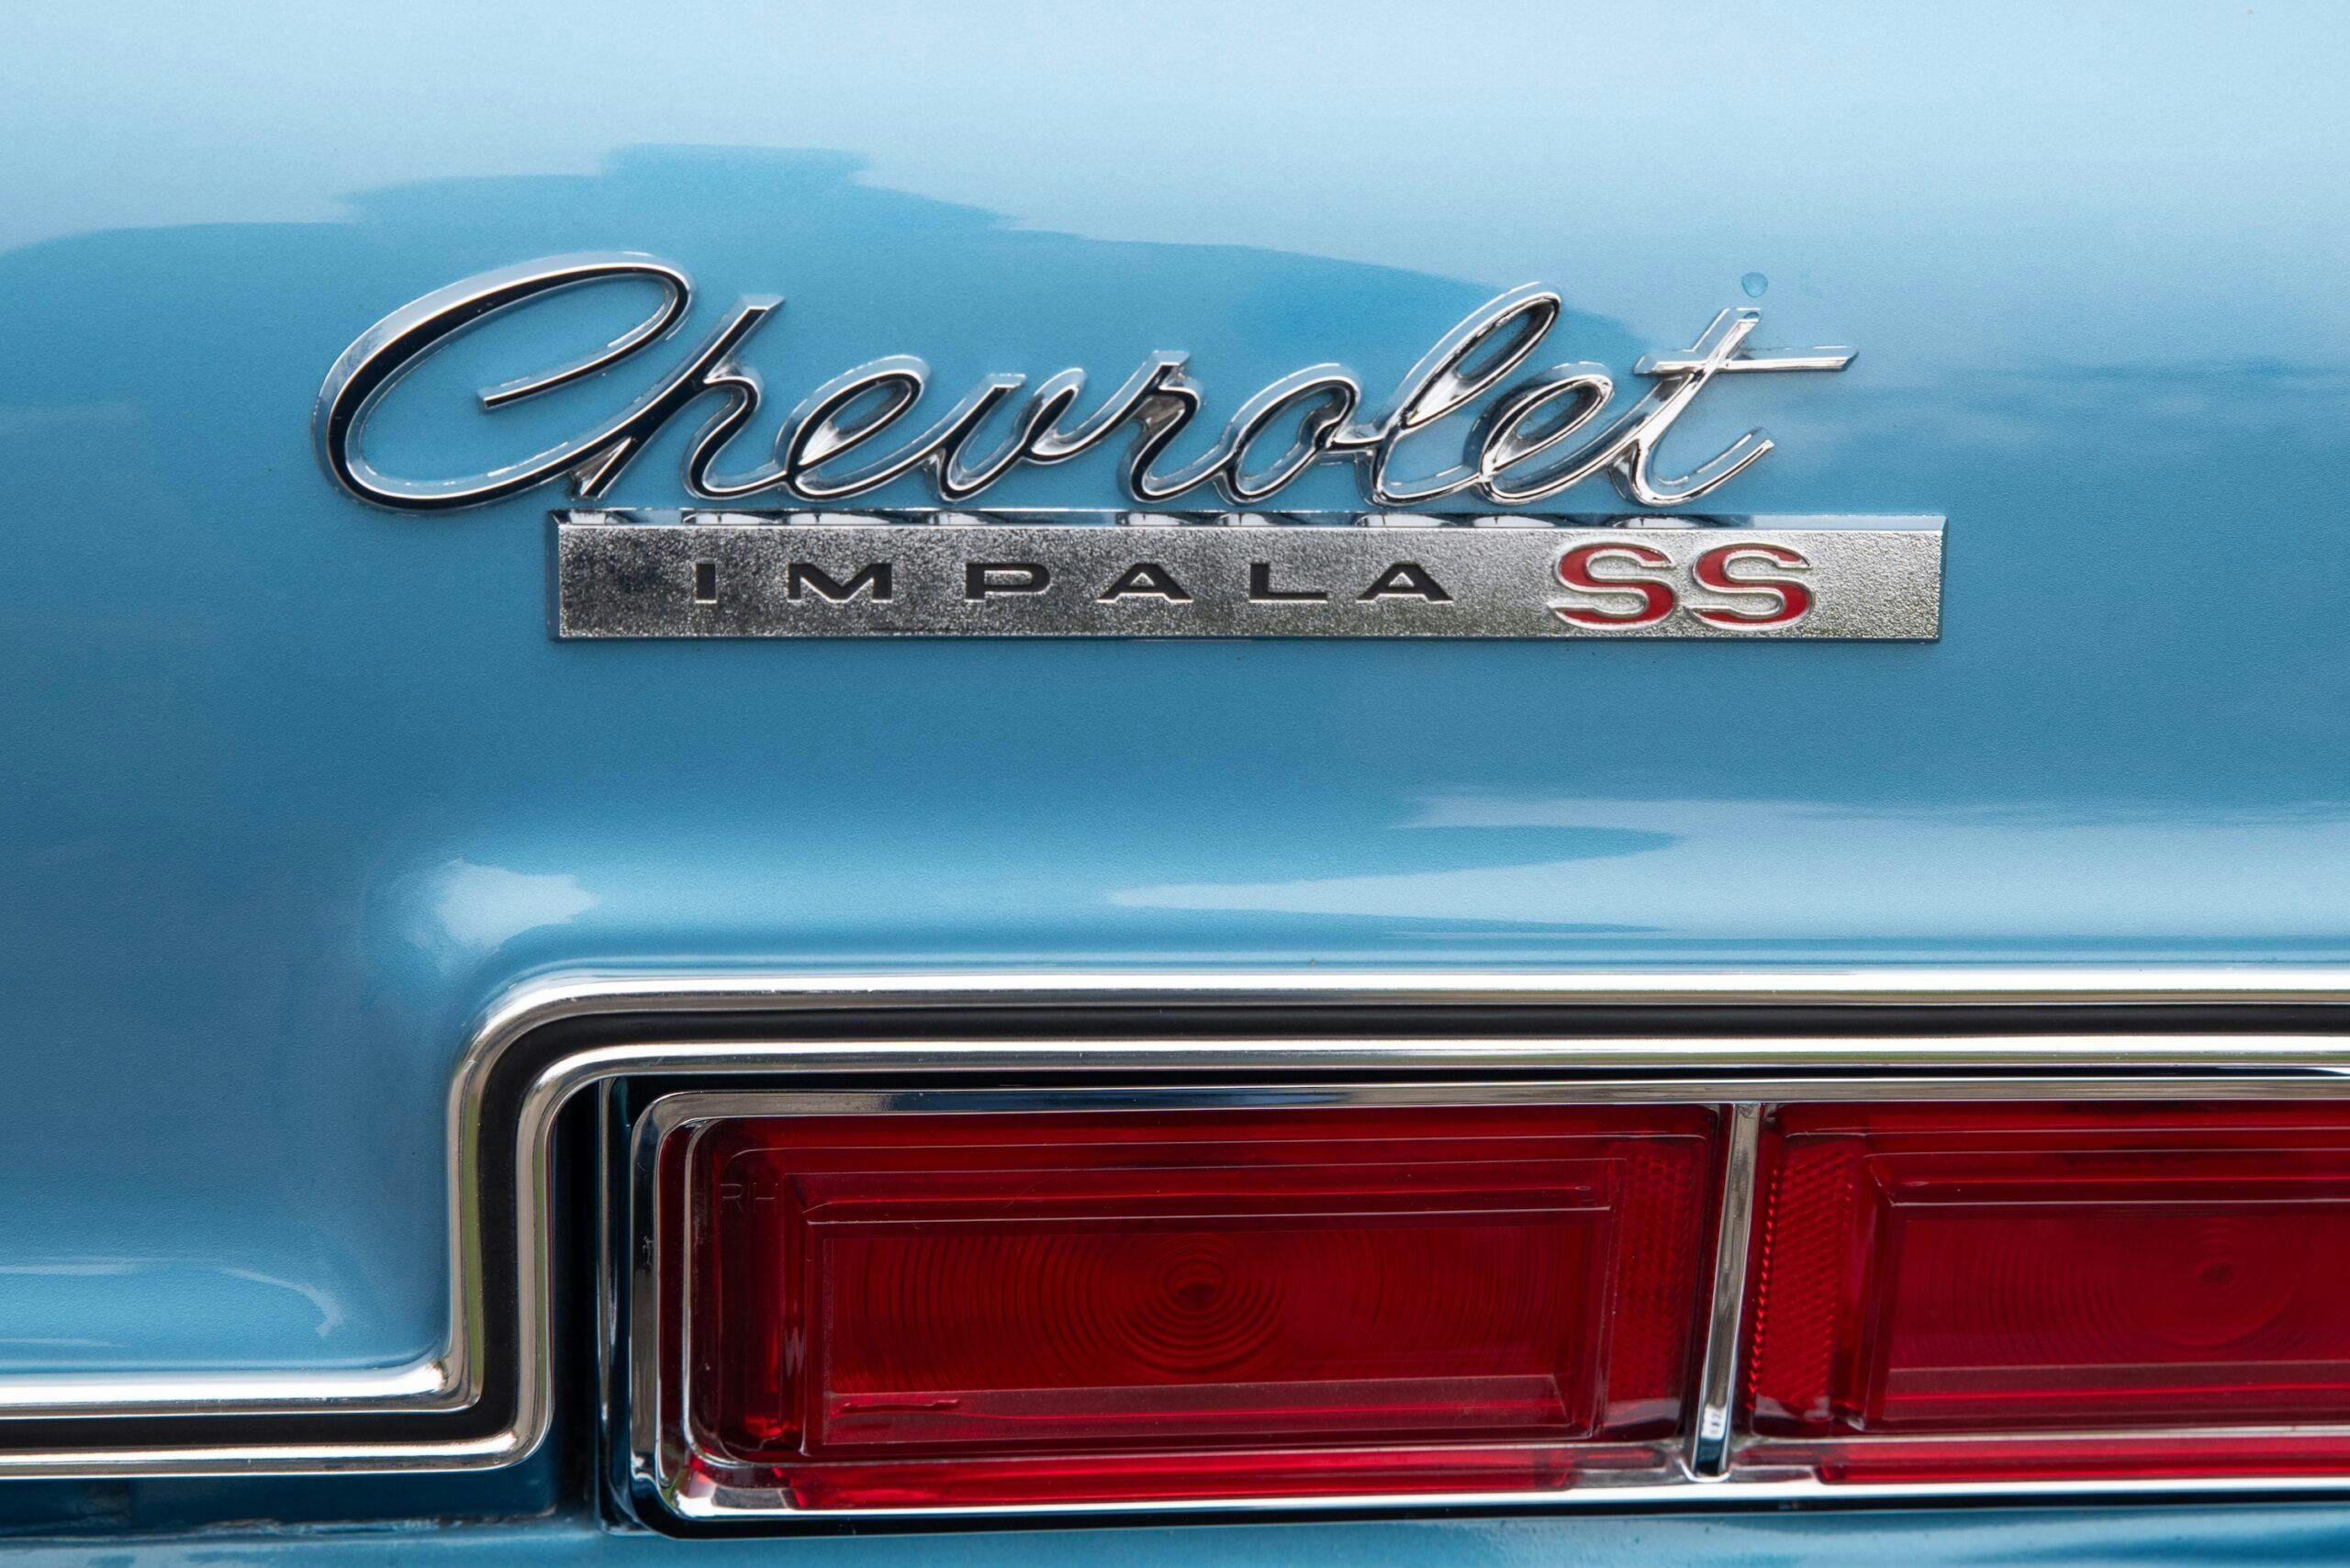 1966 Impala Super Sport convertible badge detail